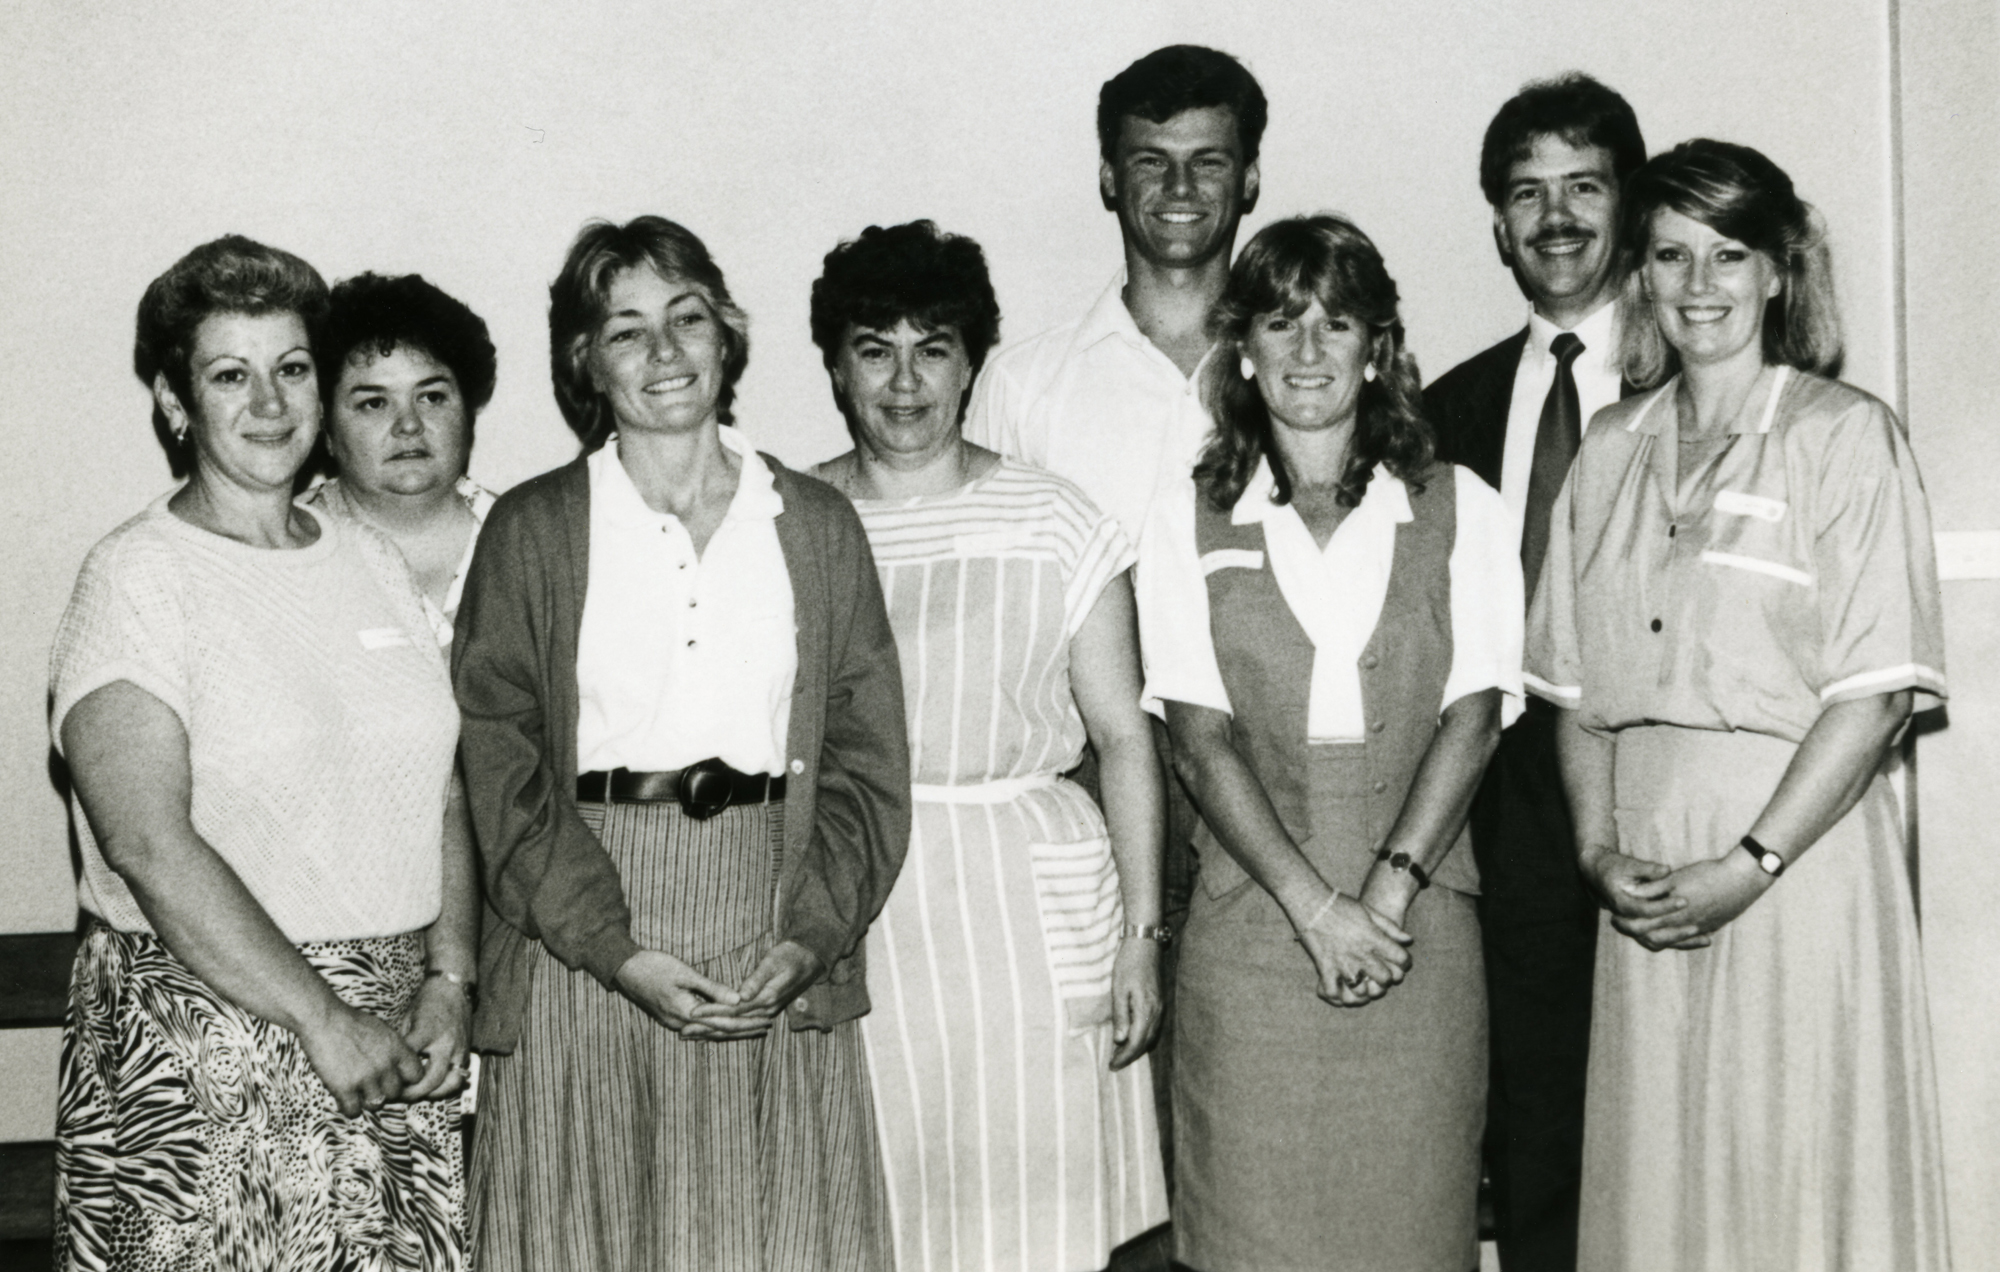   Auslan interpreters, 1980s  